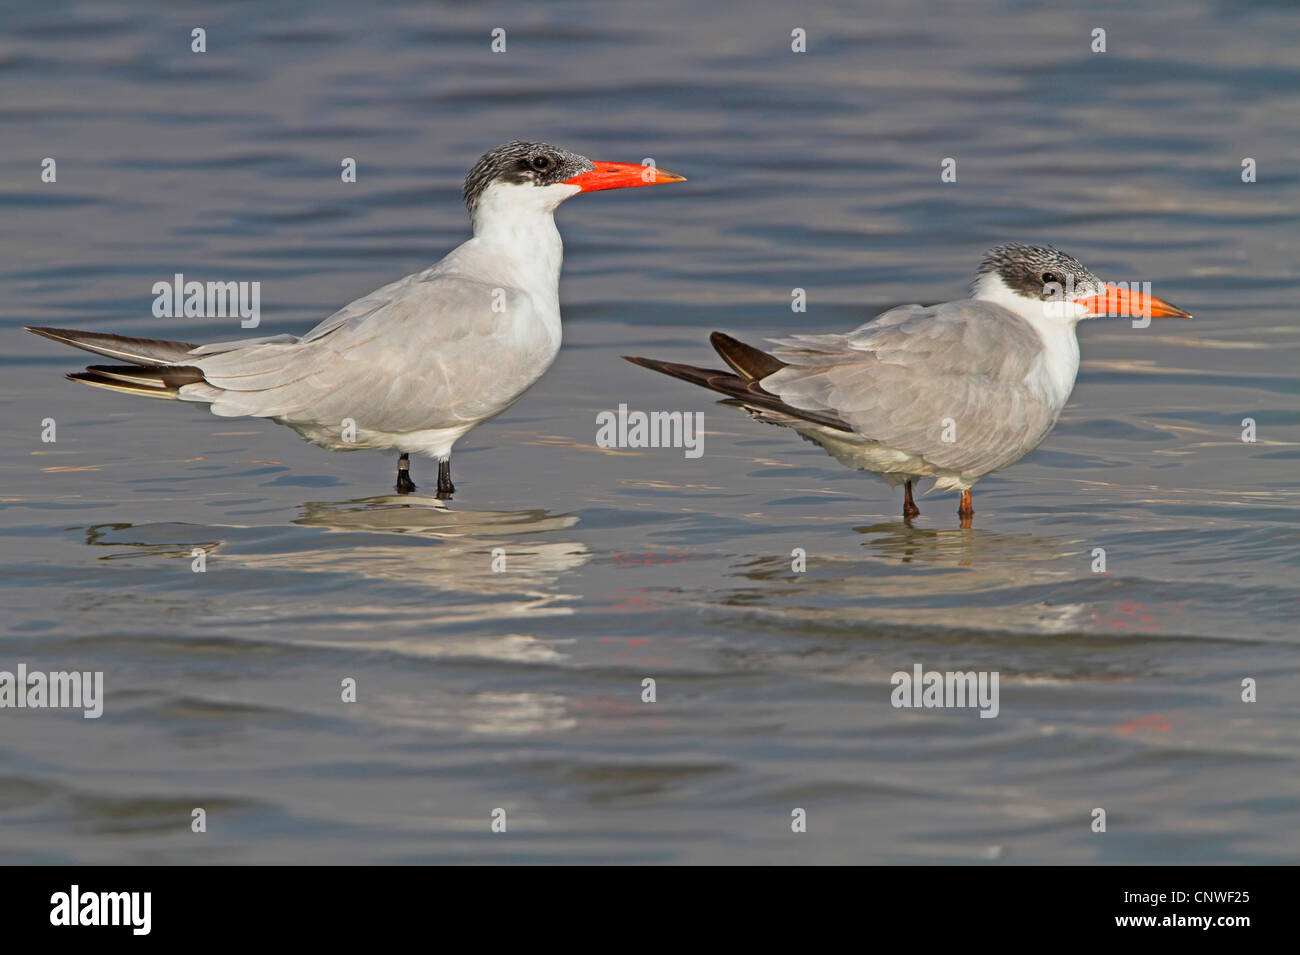 caspian tern (Hydroprogne caspia, Sterna caspia), two individuals standing in water, Oman Stock Photo